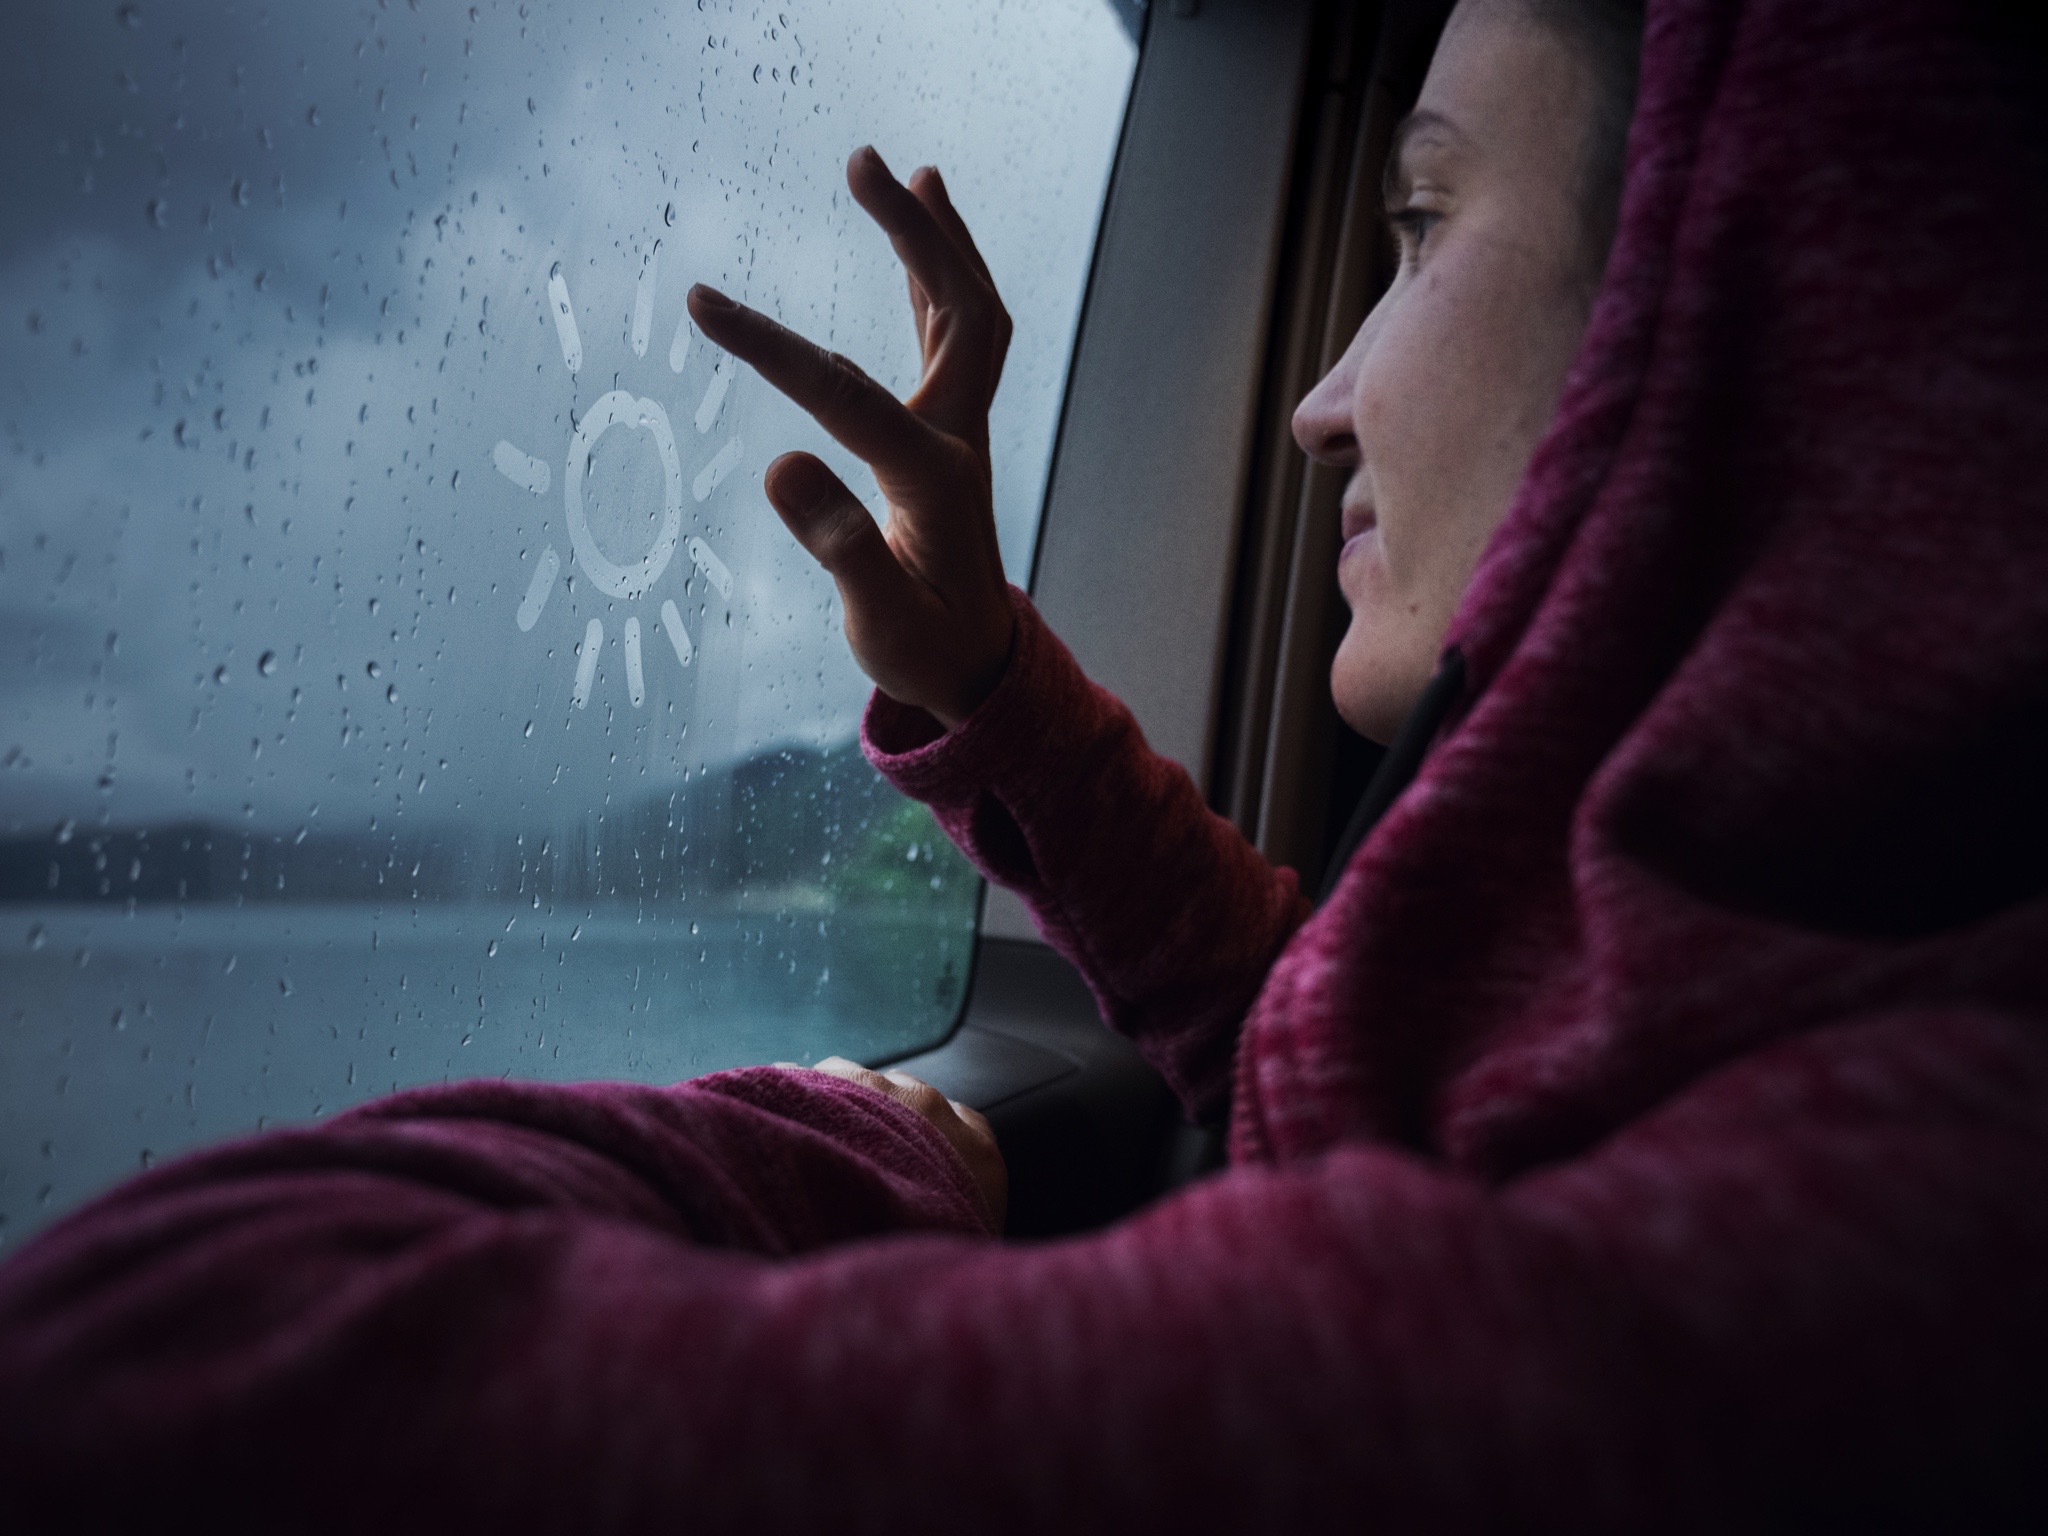 Rainy day: activities in a campervan